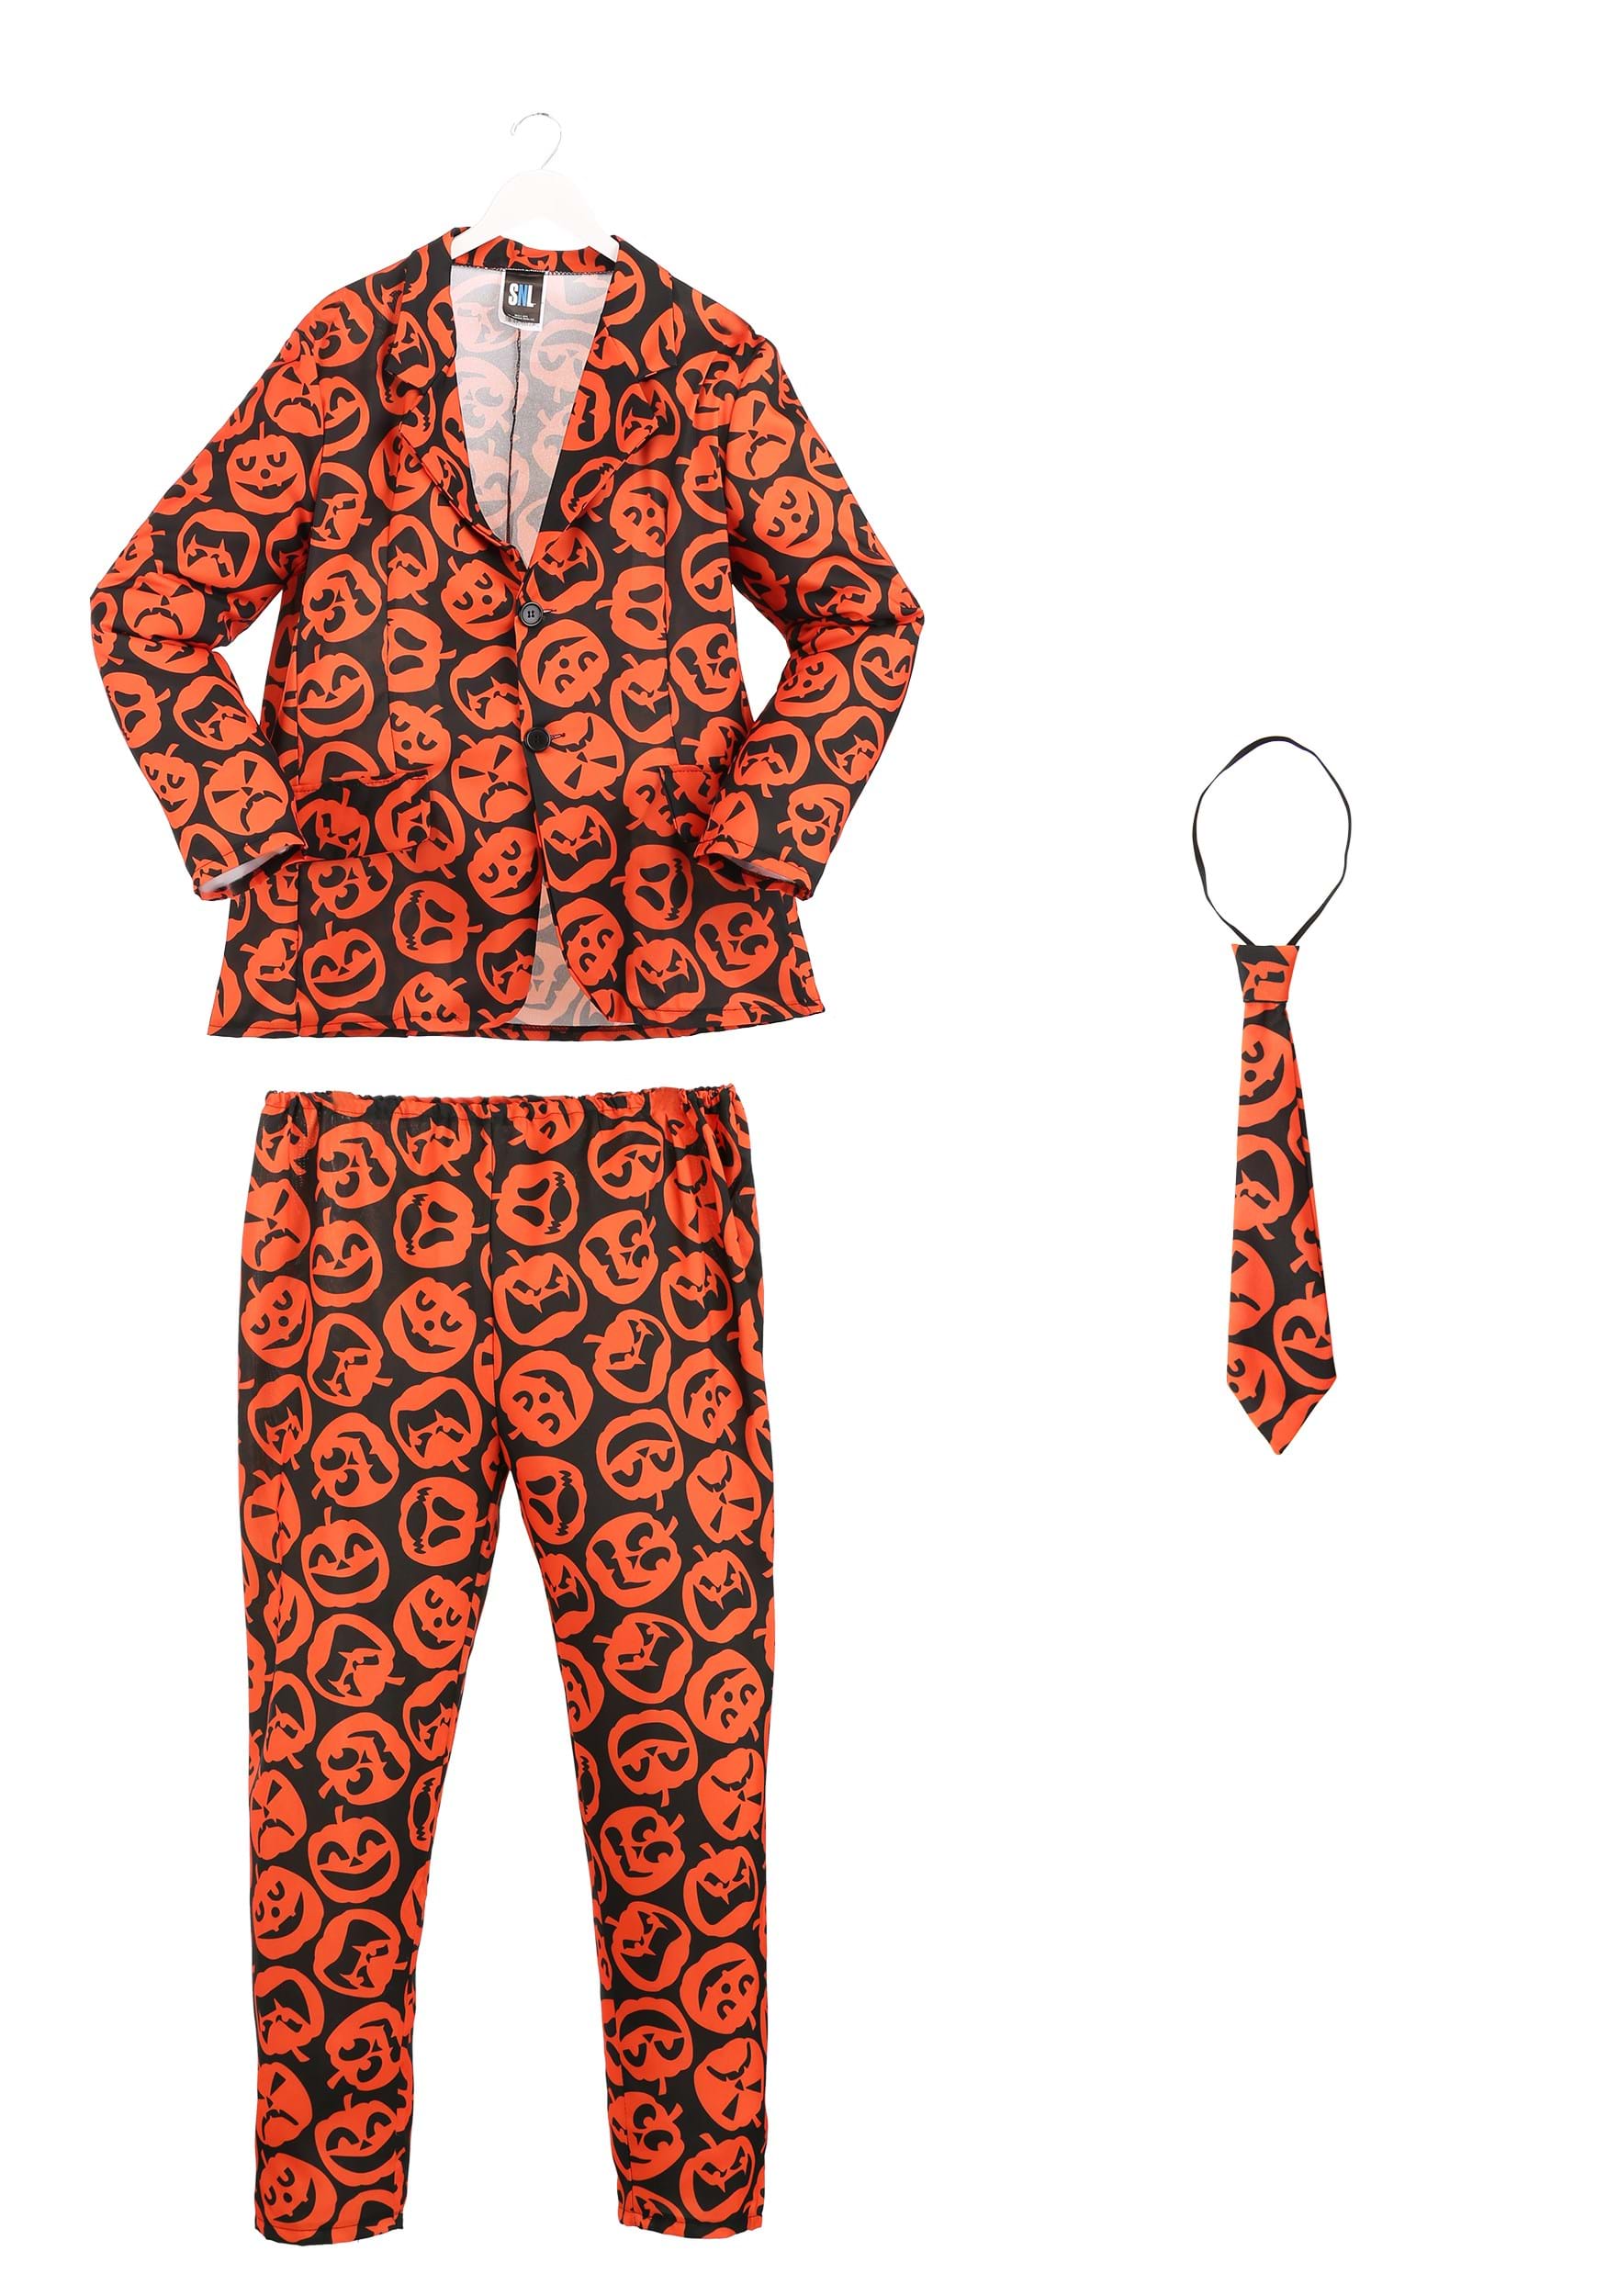 David S. Pumpkins Fancy Dress Costume For Men